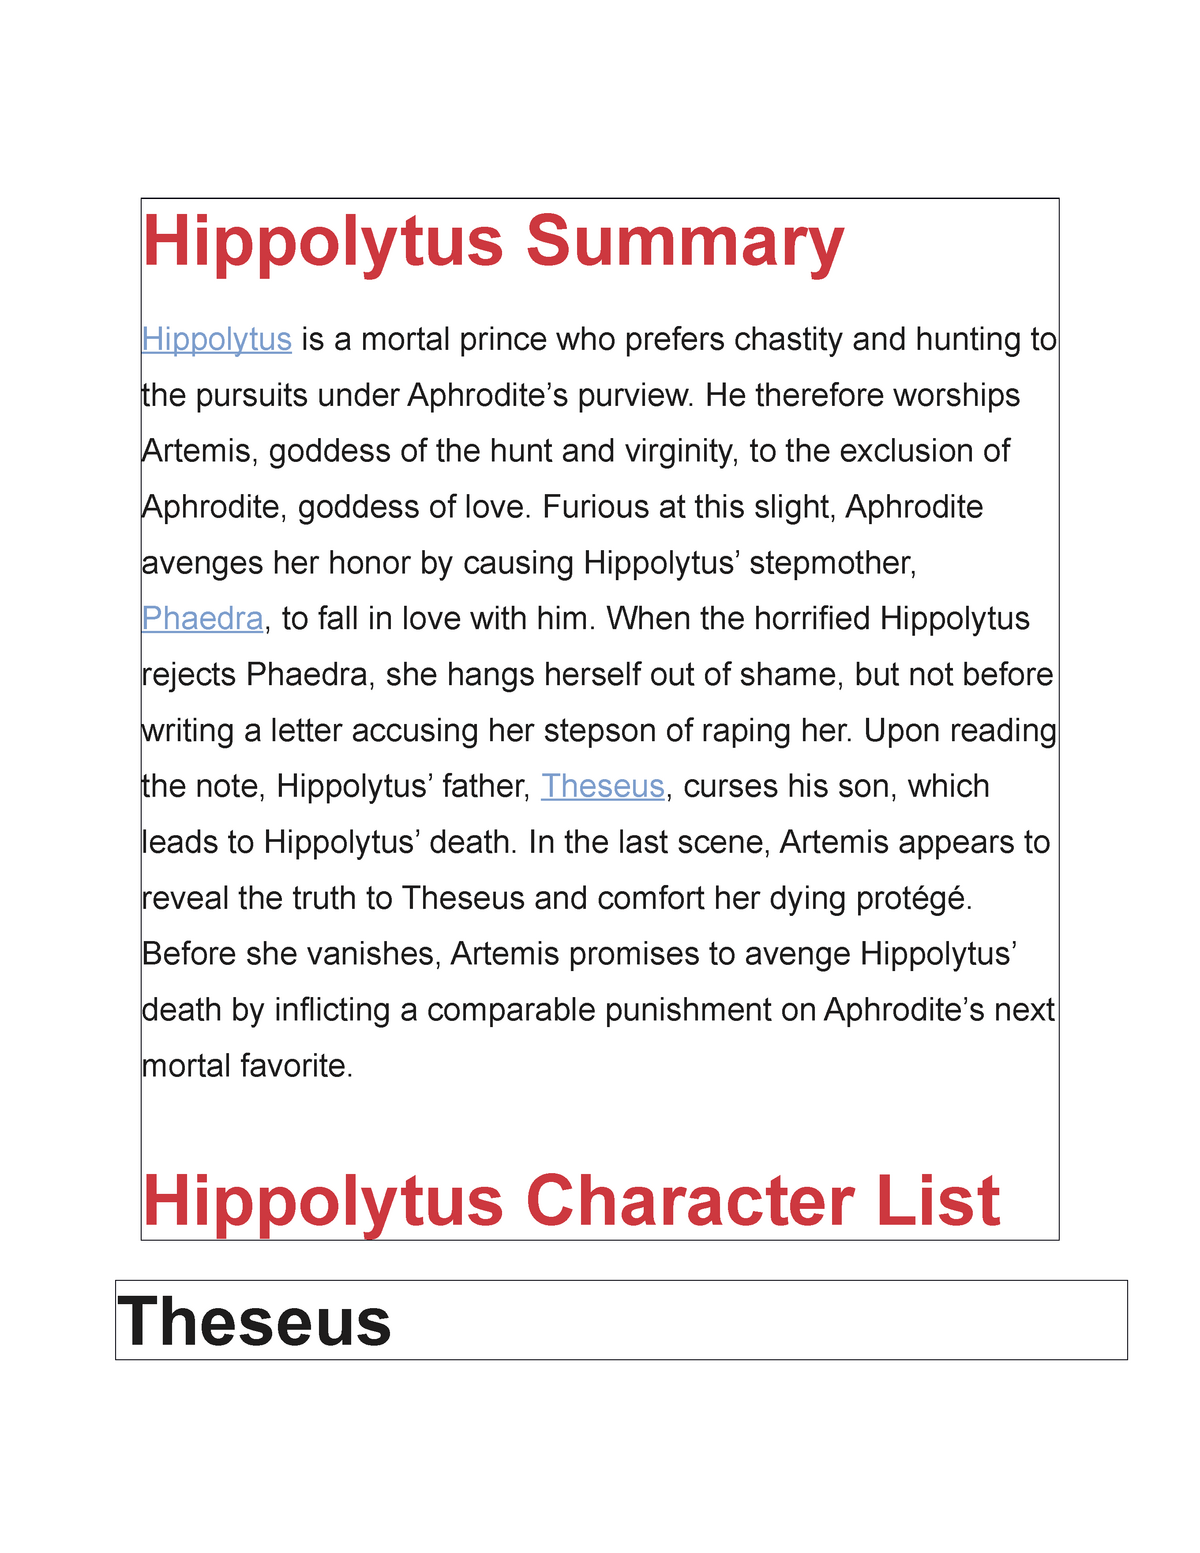 The course of phaedras erotic passion in euripides hippolytus